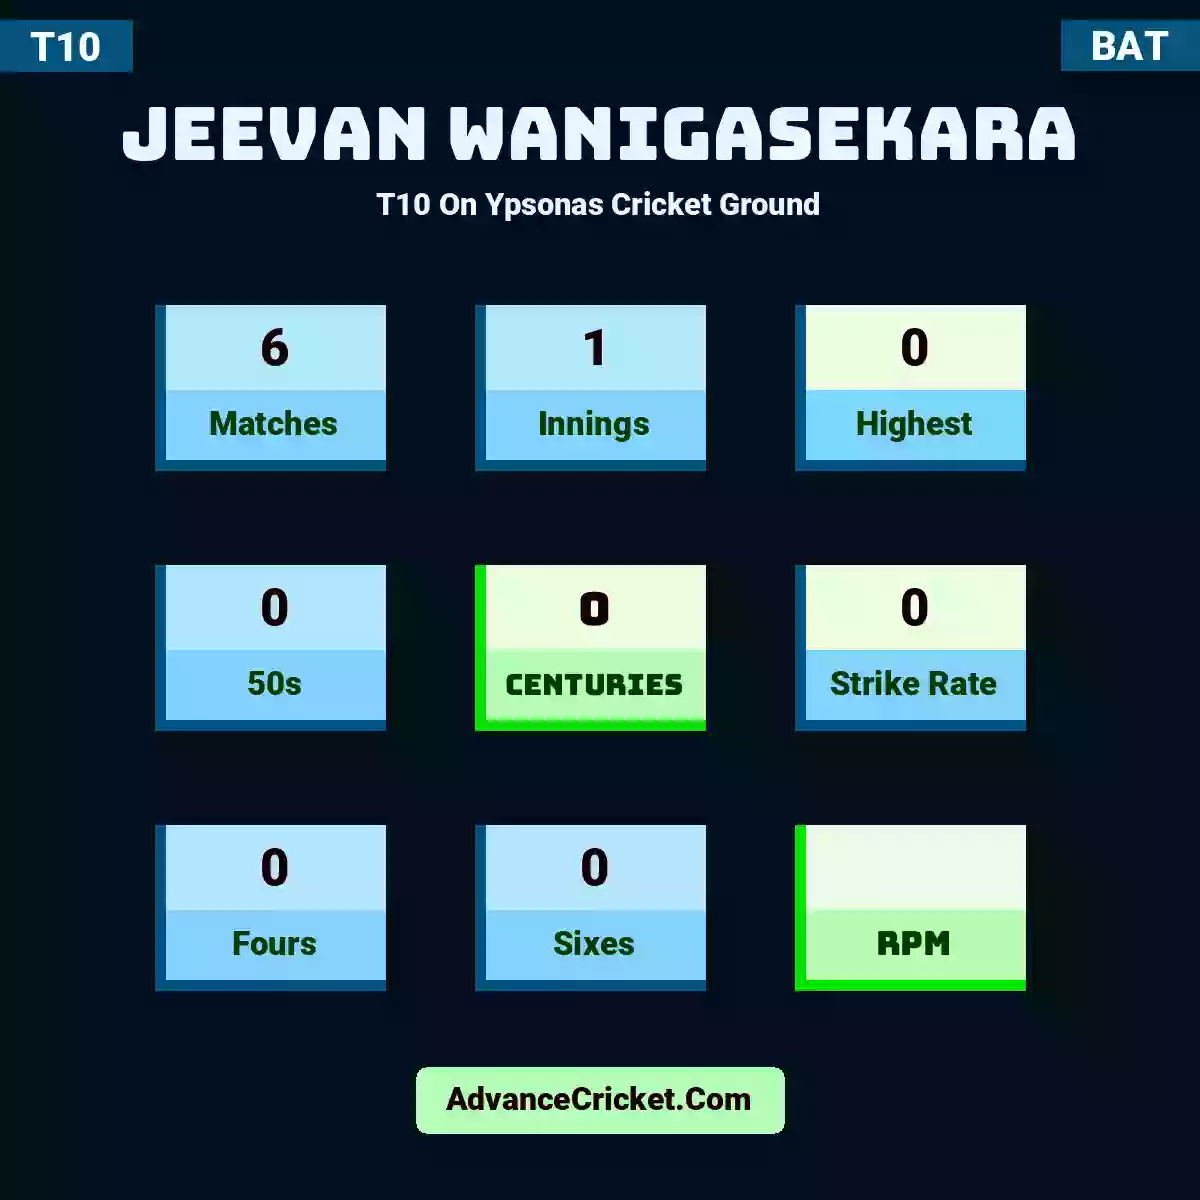 Jeevan Wanigasekara T10  On Ypsonas Cricket Ground, Jeevan Wanigasekara played 6 matches, scored 0 runs as highest, 0 half-centuries, and 0 centuries, with a strike rate of 0. J.Wanigasekara hit 0 fours and 0 sixes.